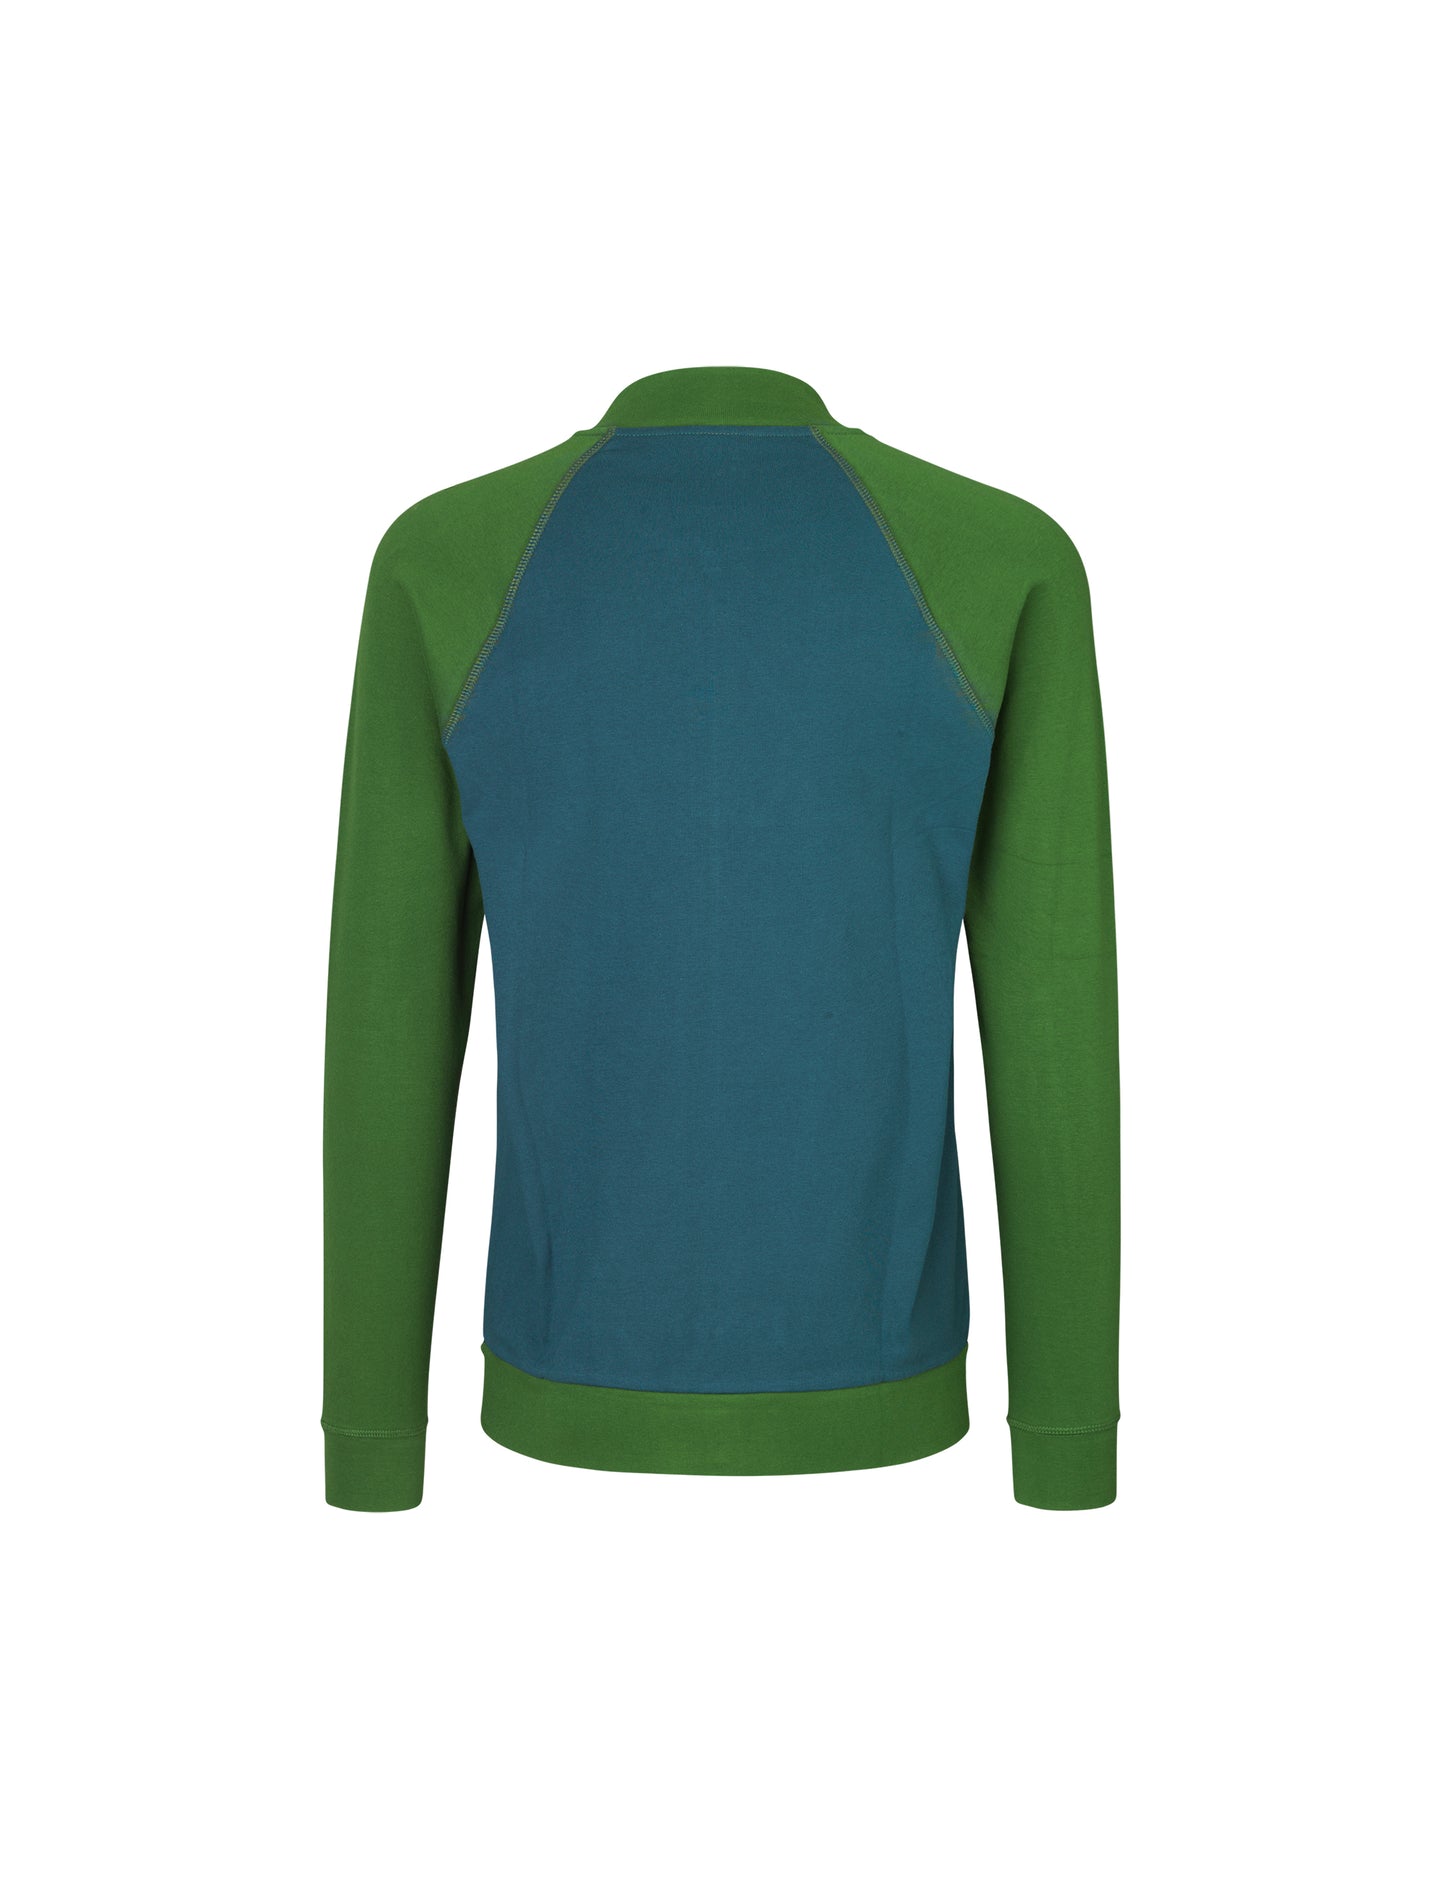 Cotton Rib Jacket Contrast, Garden Green/Stargazer